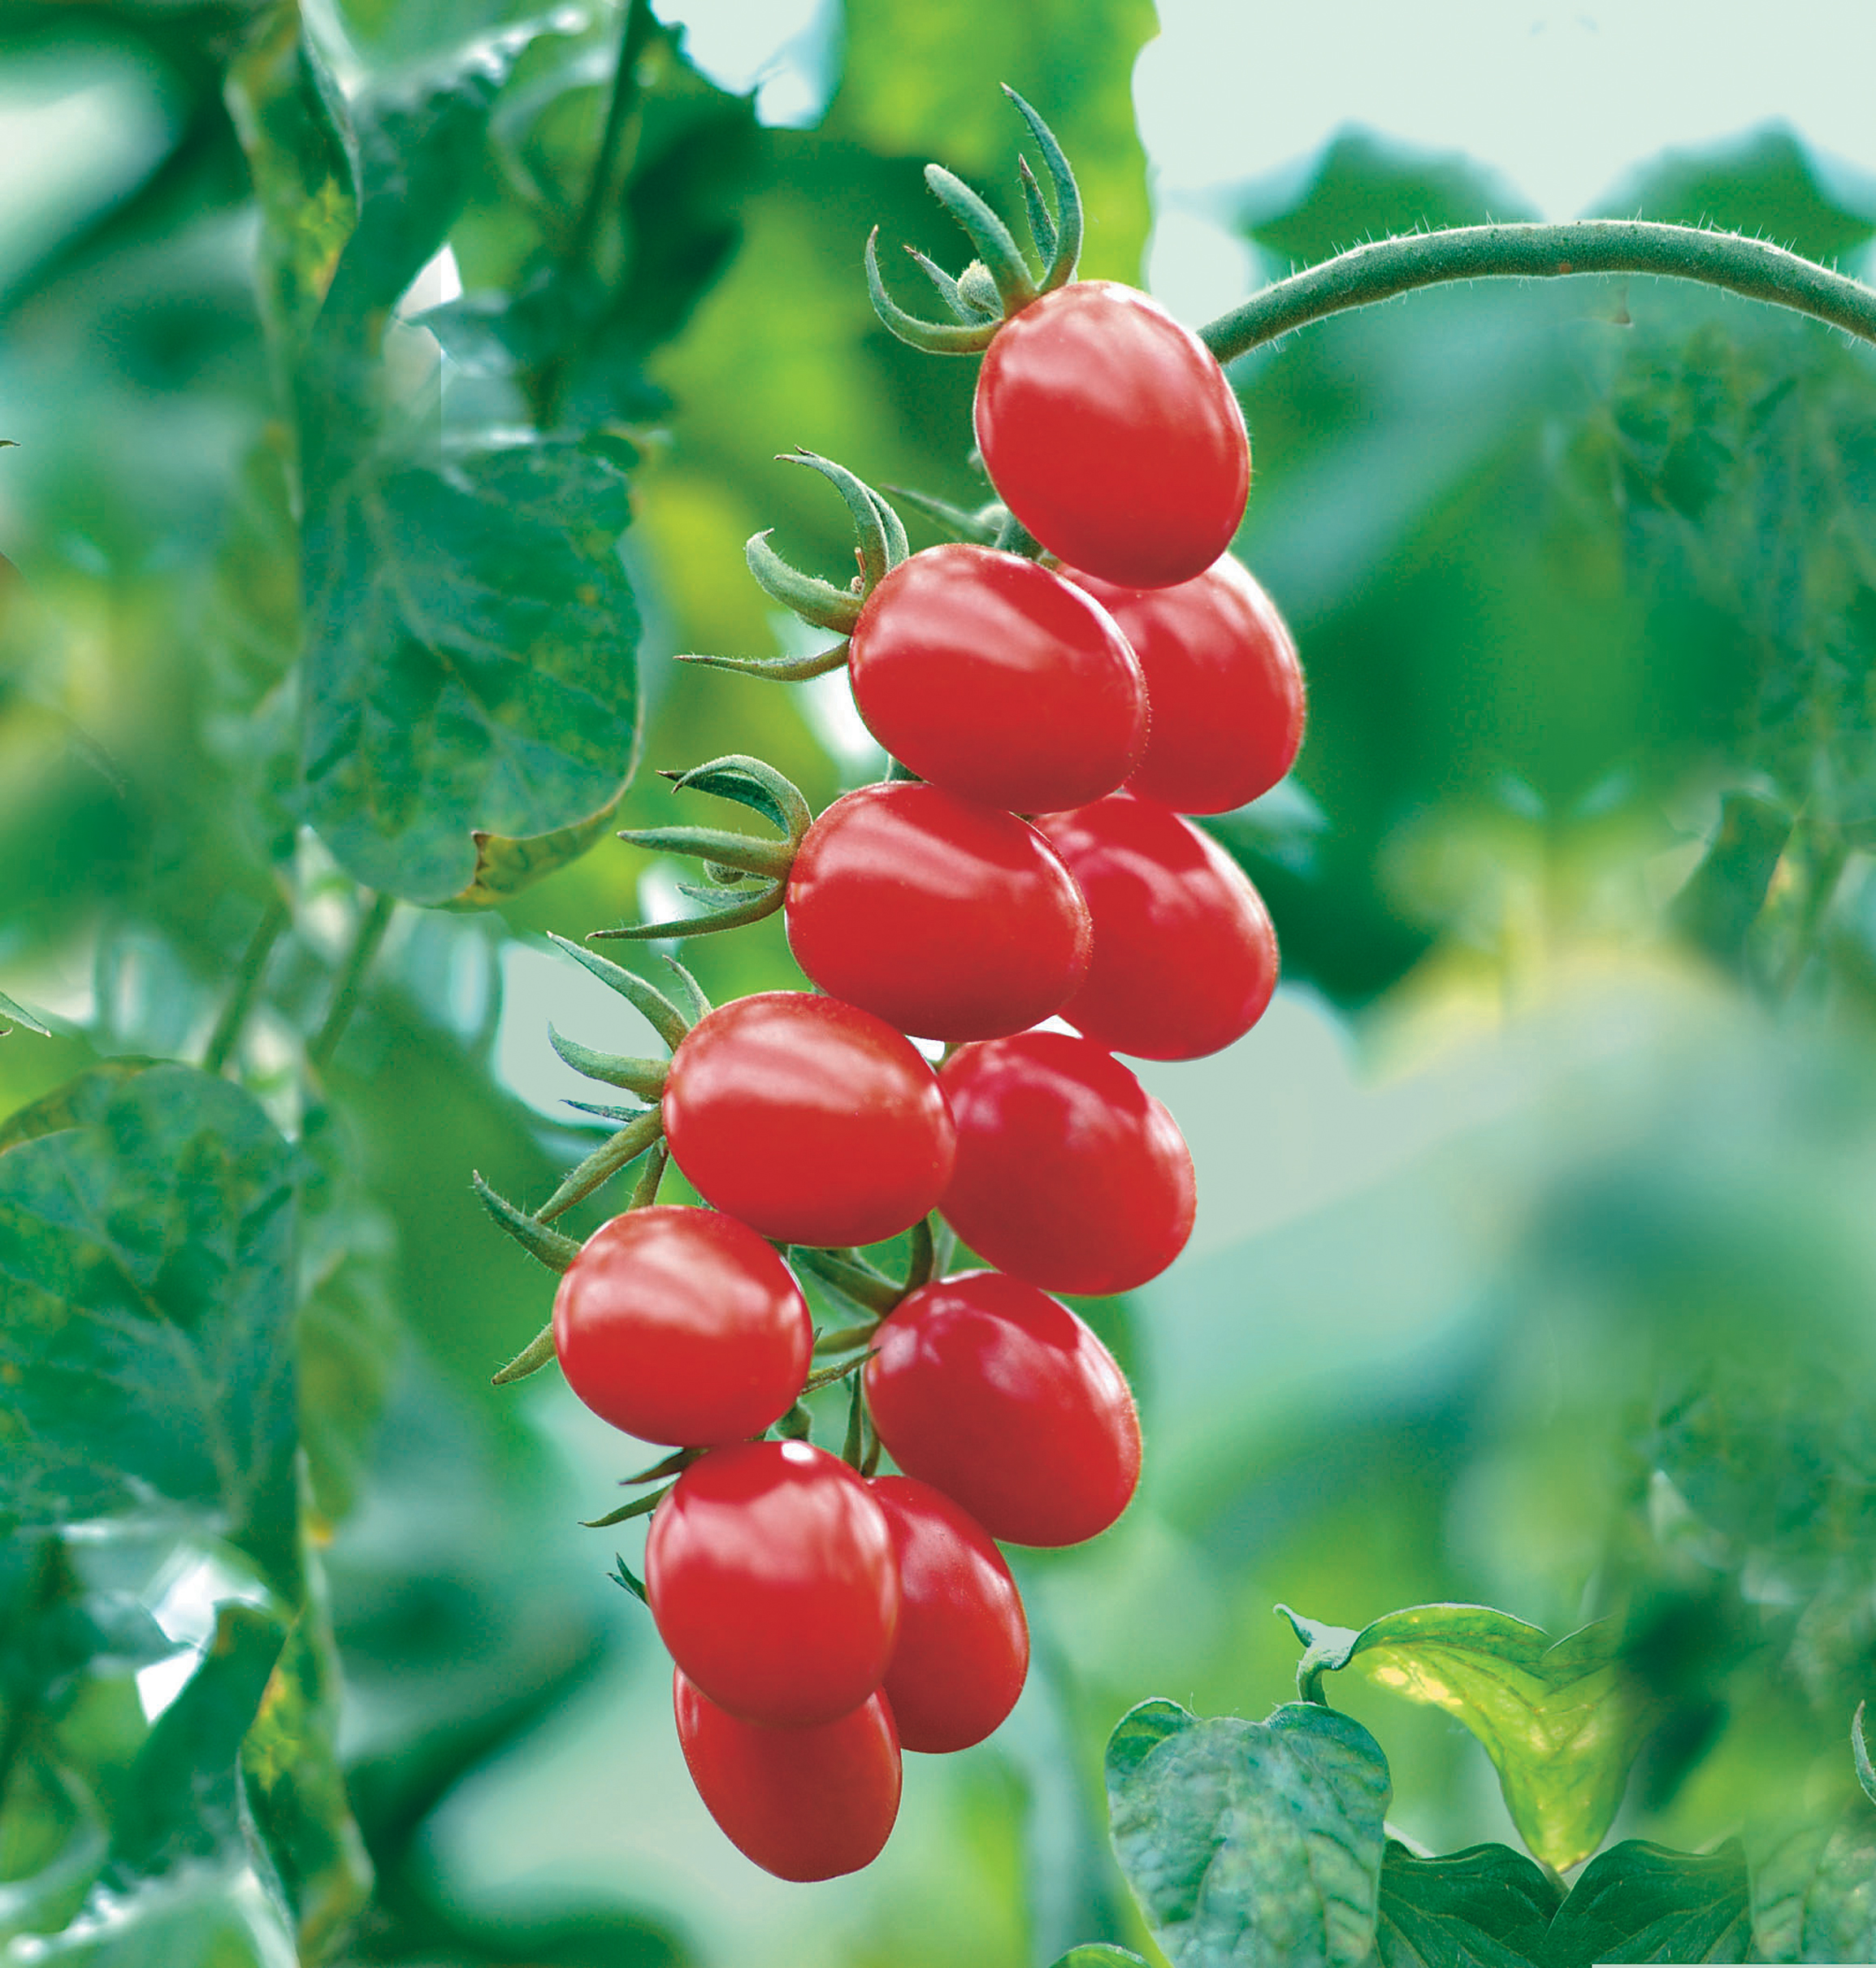 If you prefer plum tomatoes, go for Santonio (Thompson & Morgan/PA)